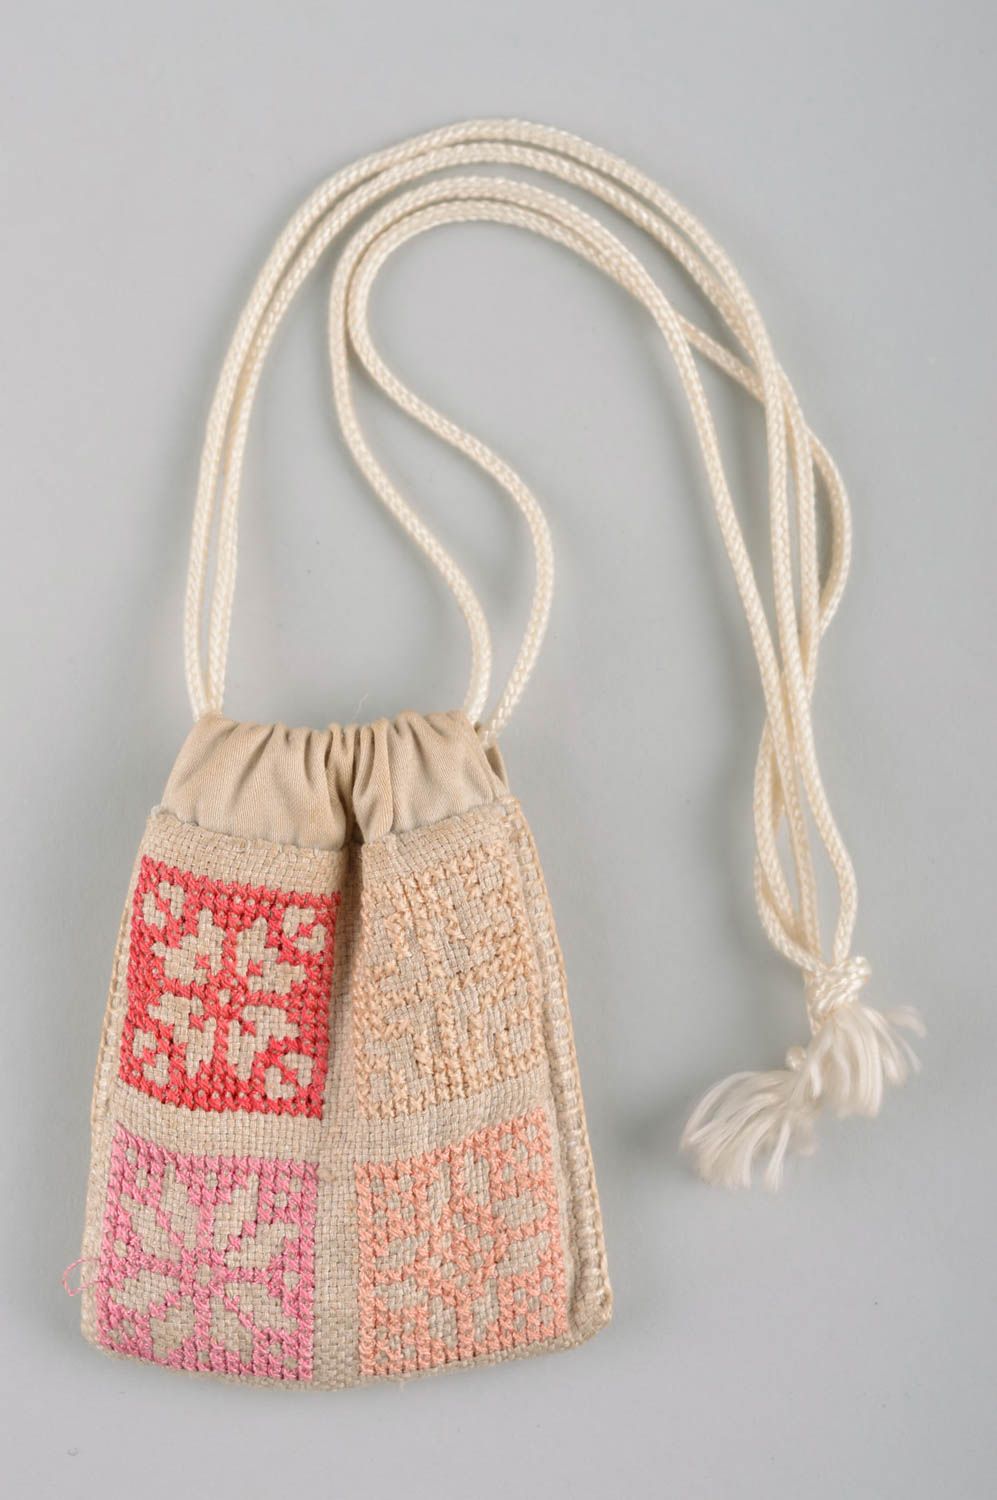 Unusual handmade fabric pouch textile purse for women handmade accessories photo 2